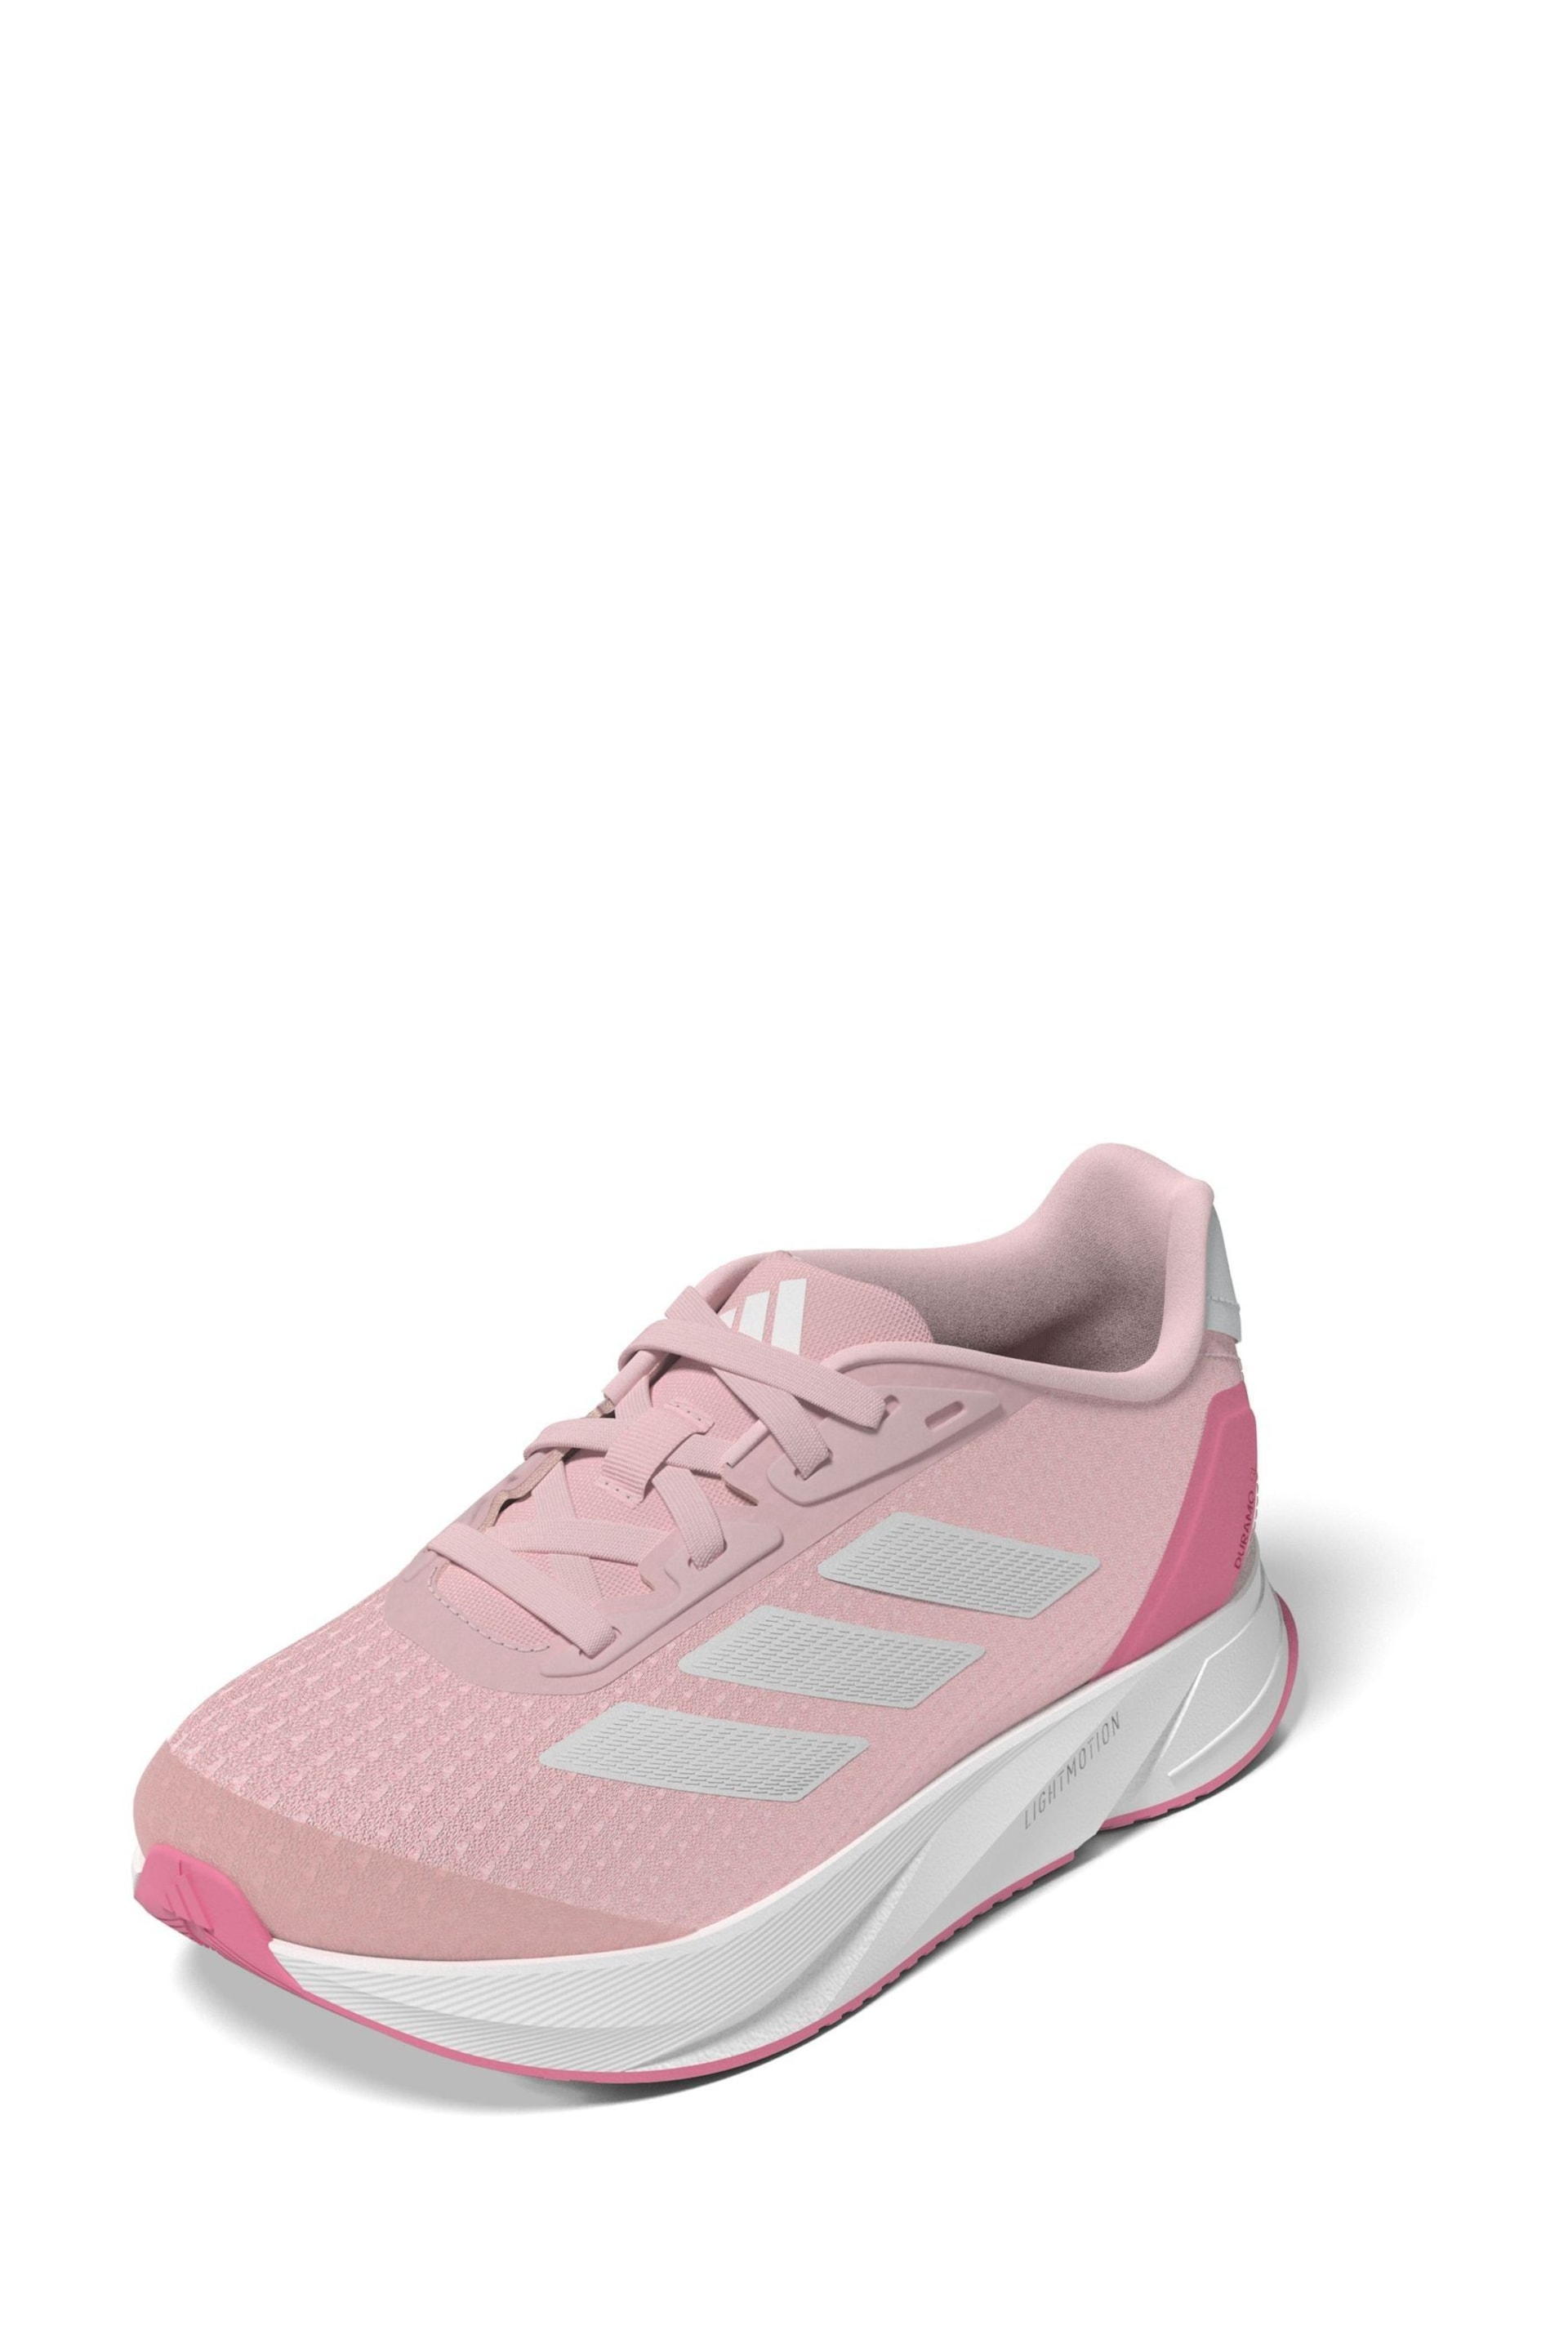 adidas Pink Kids Duramo Shoes - Image 2 of 4